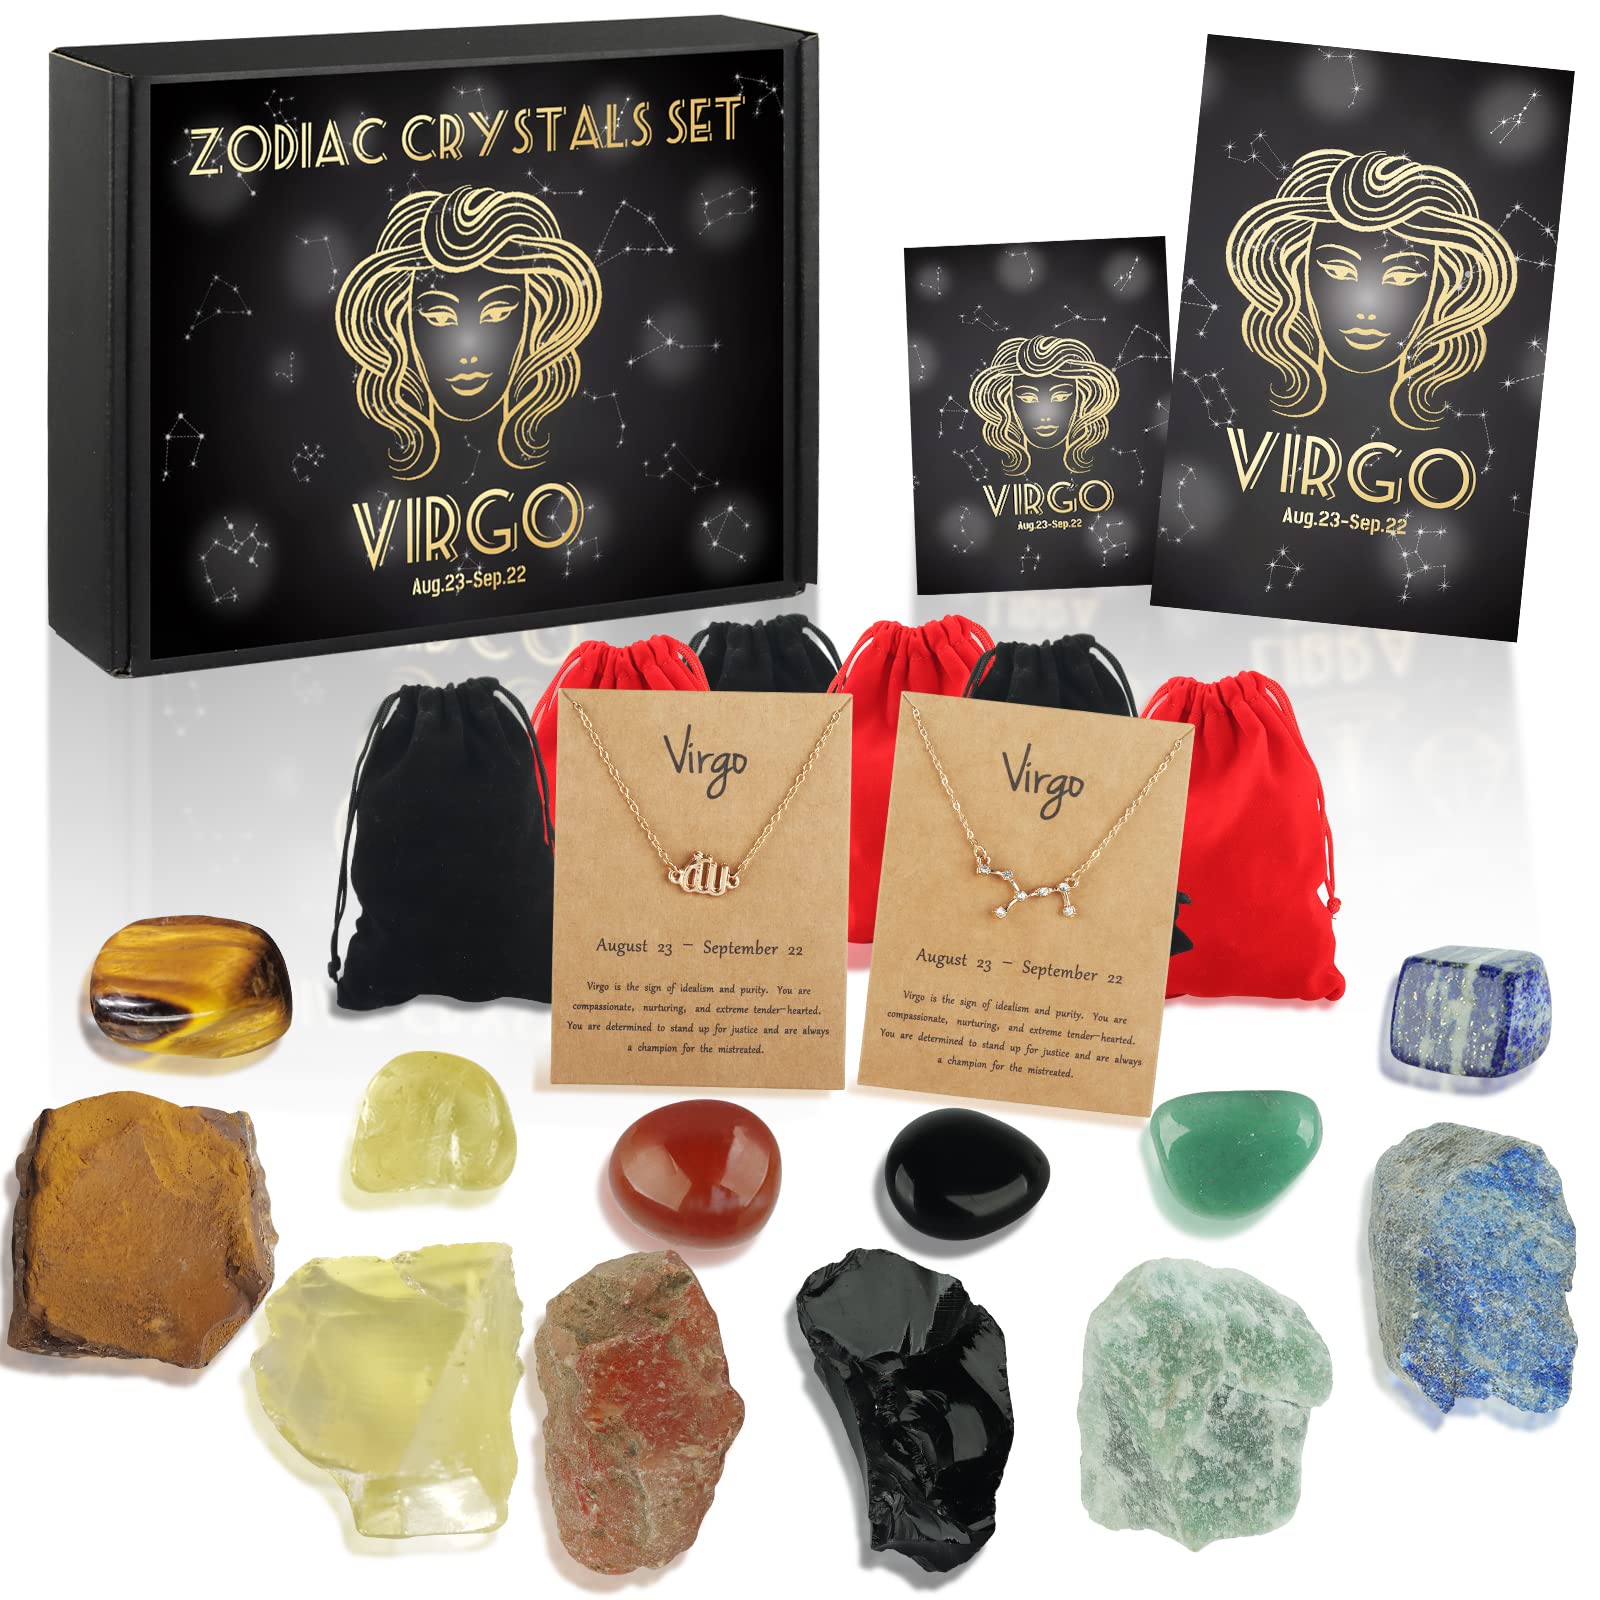 Zodiac Crystals Gift Set